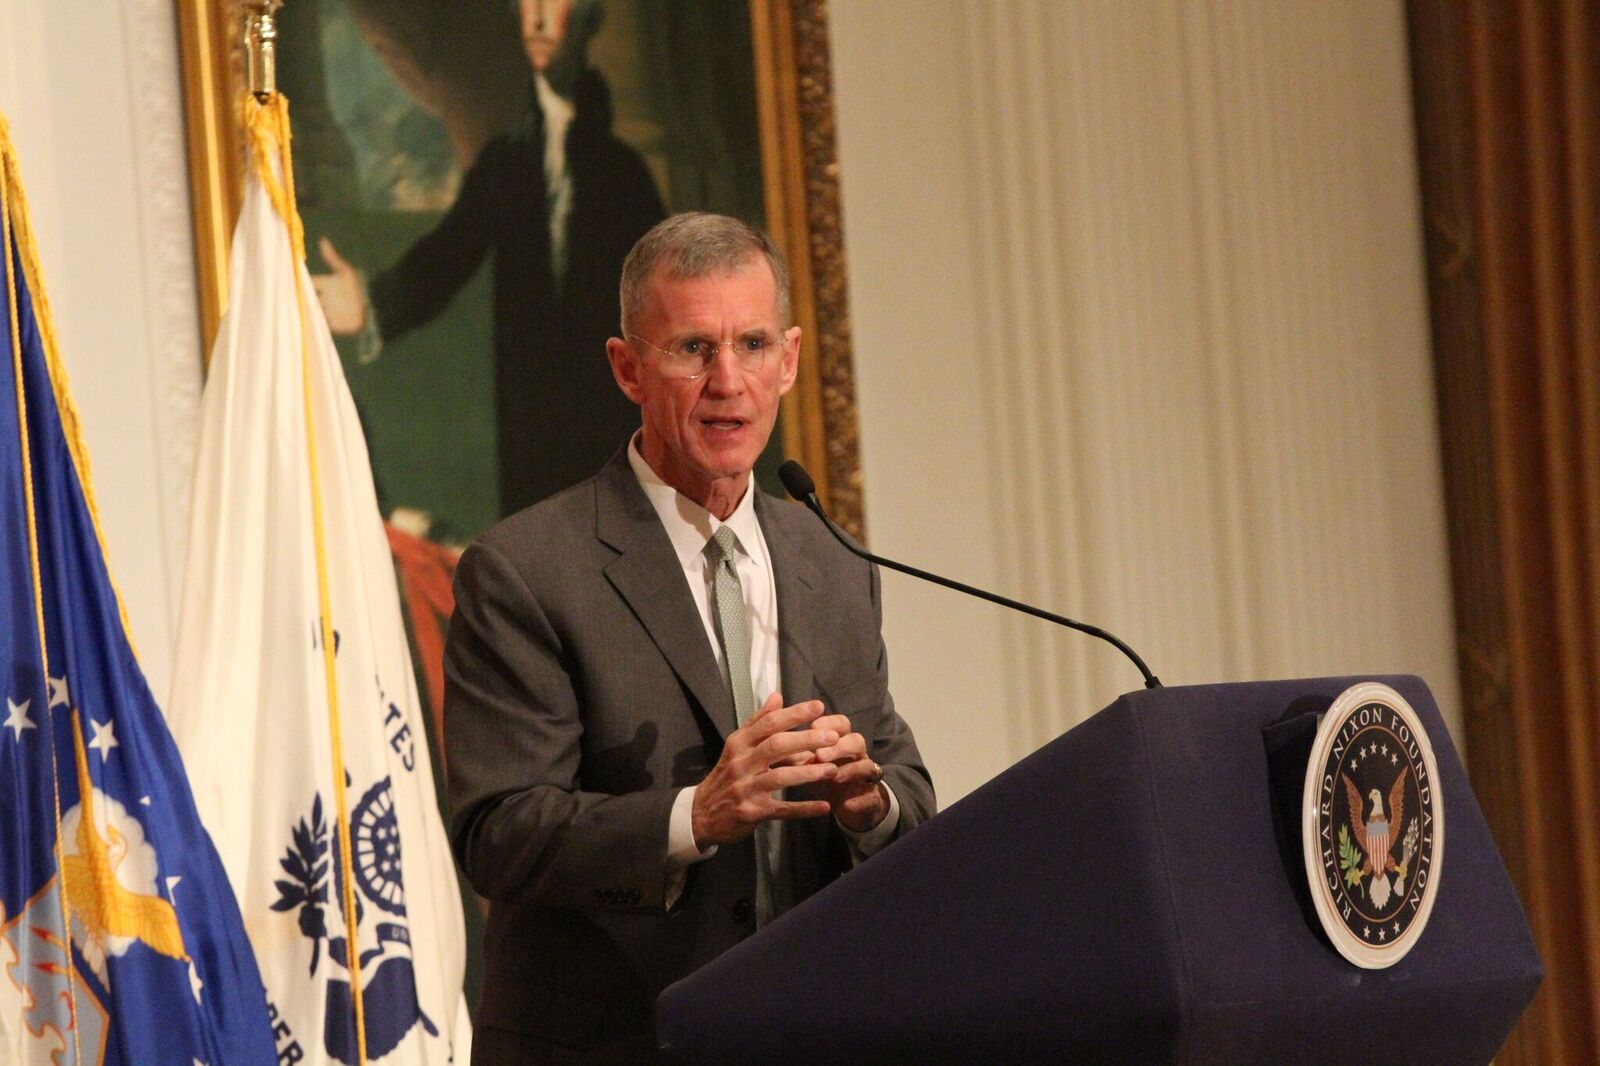 Event Recap: Veterans Day ceremony with Gen. Stanley McChrystal